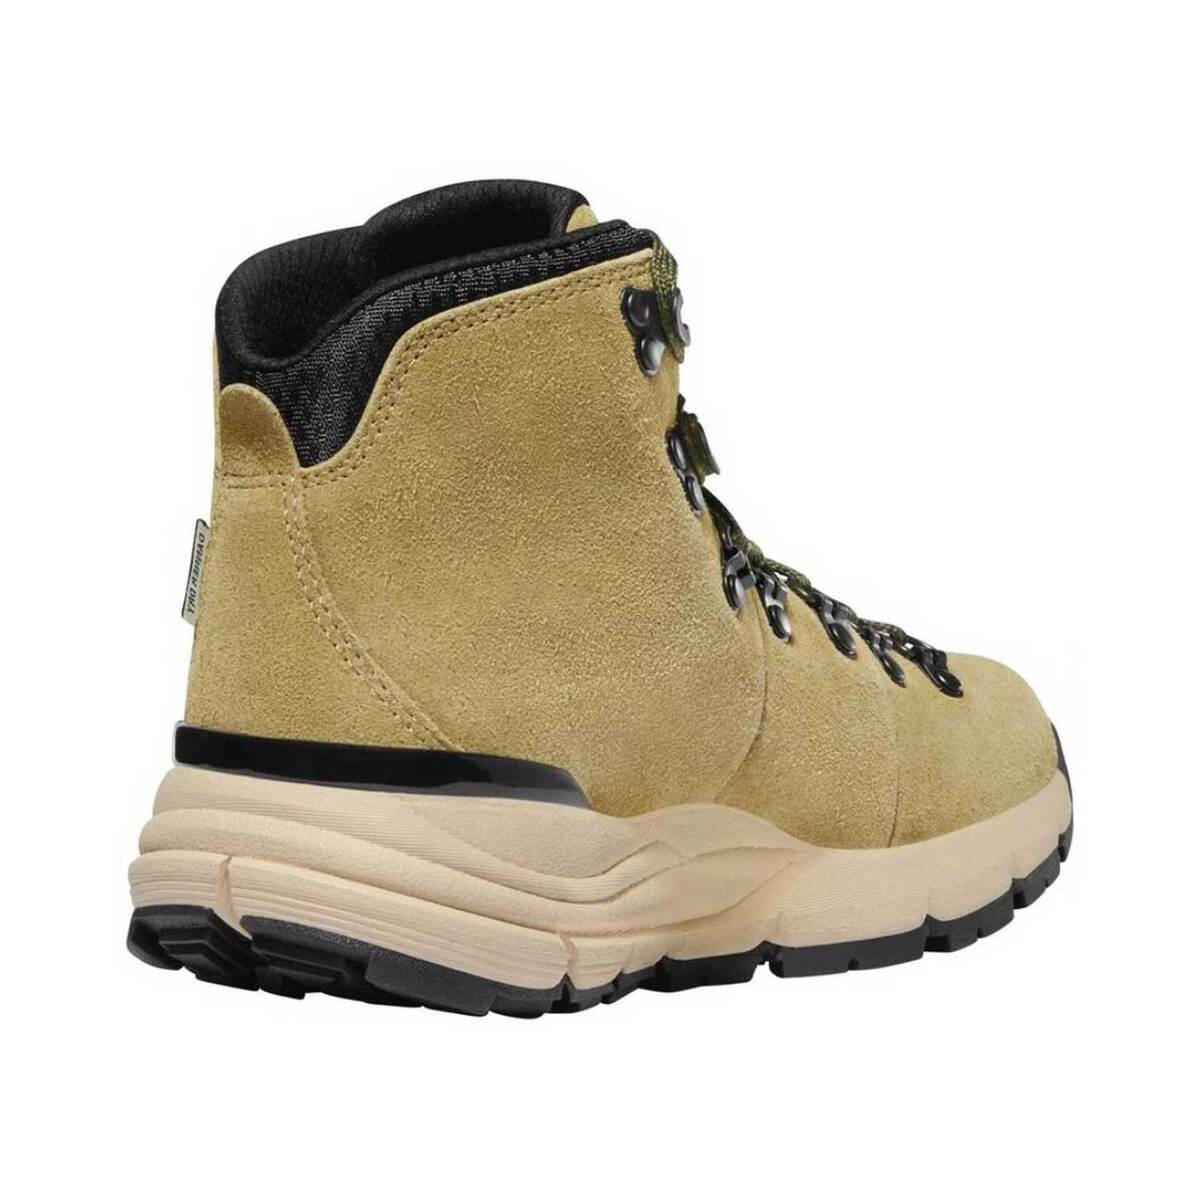 Danner Women's Mountain 600 Waterproof Mid Hiking Boots - Antique ...